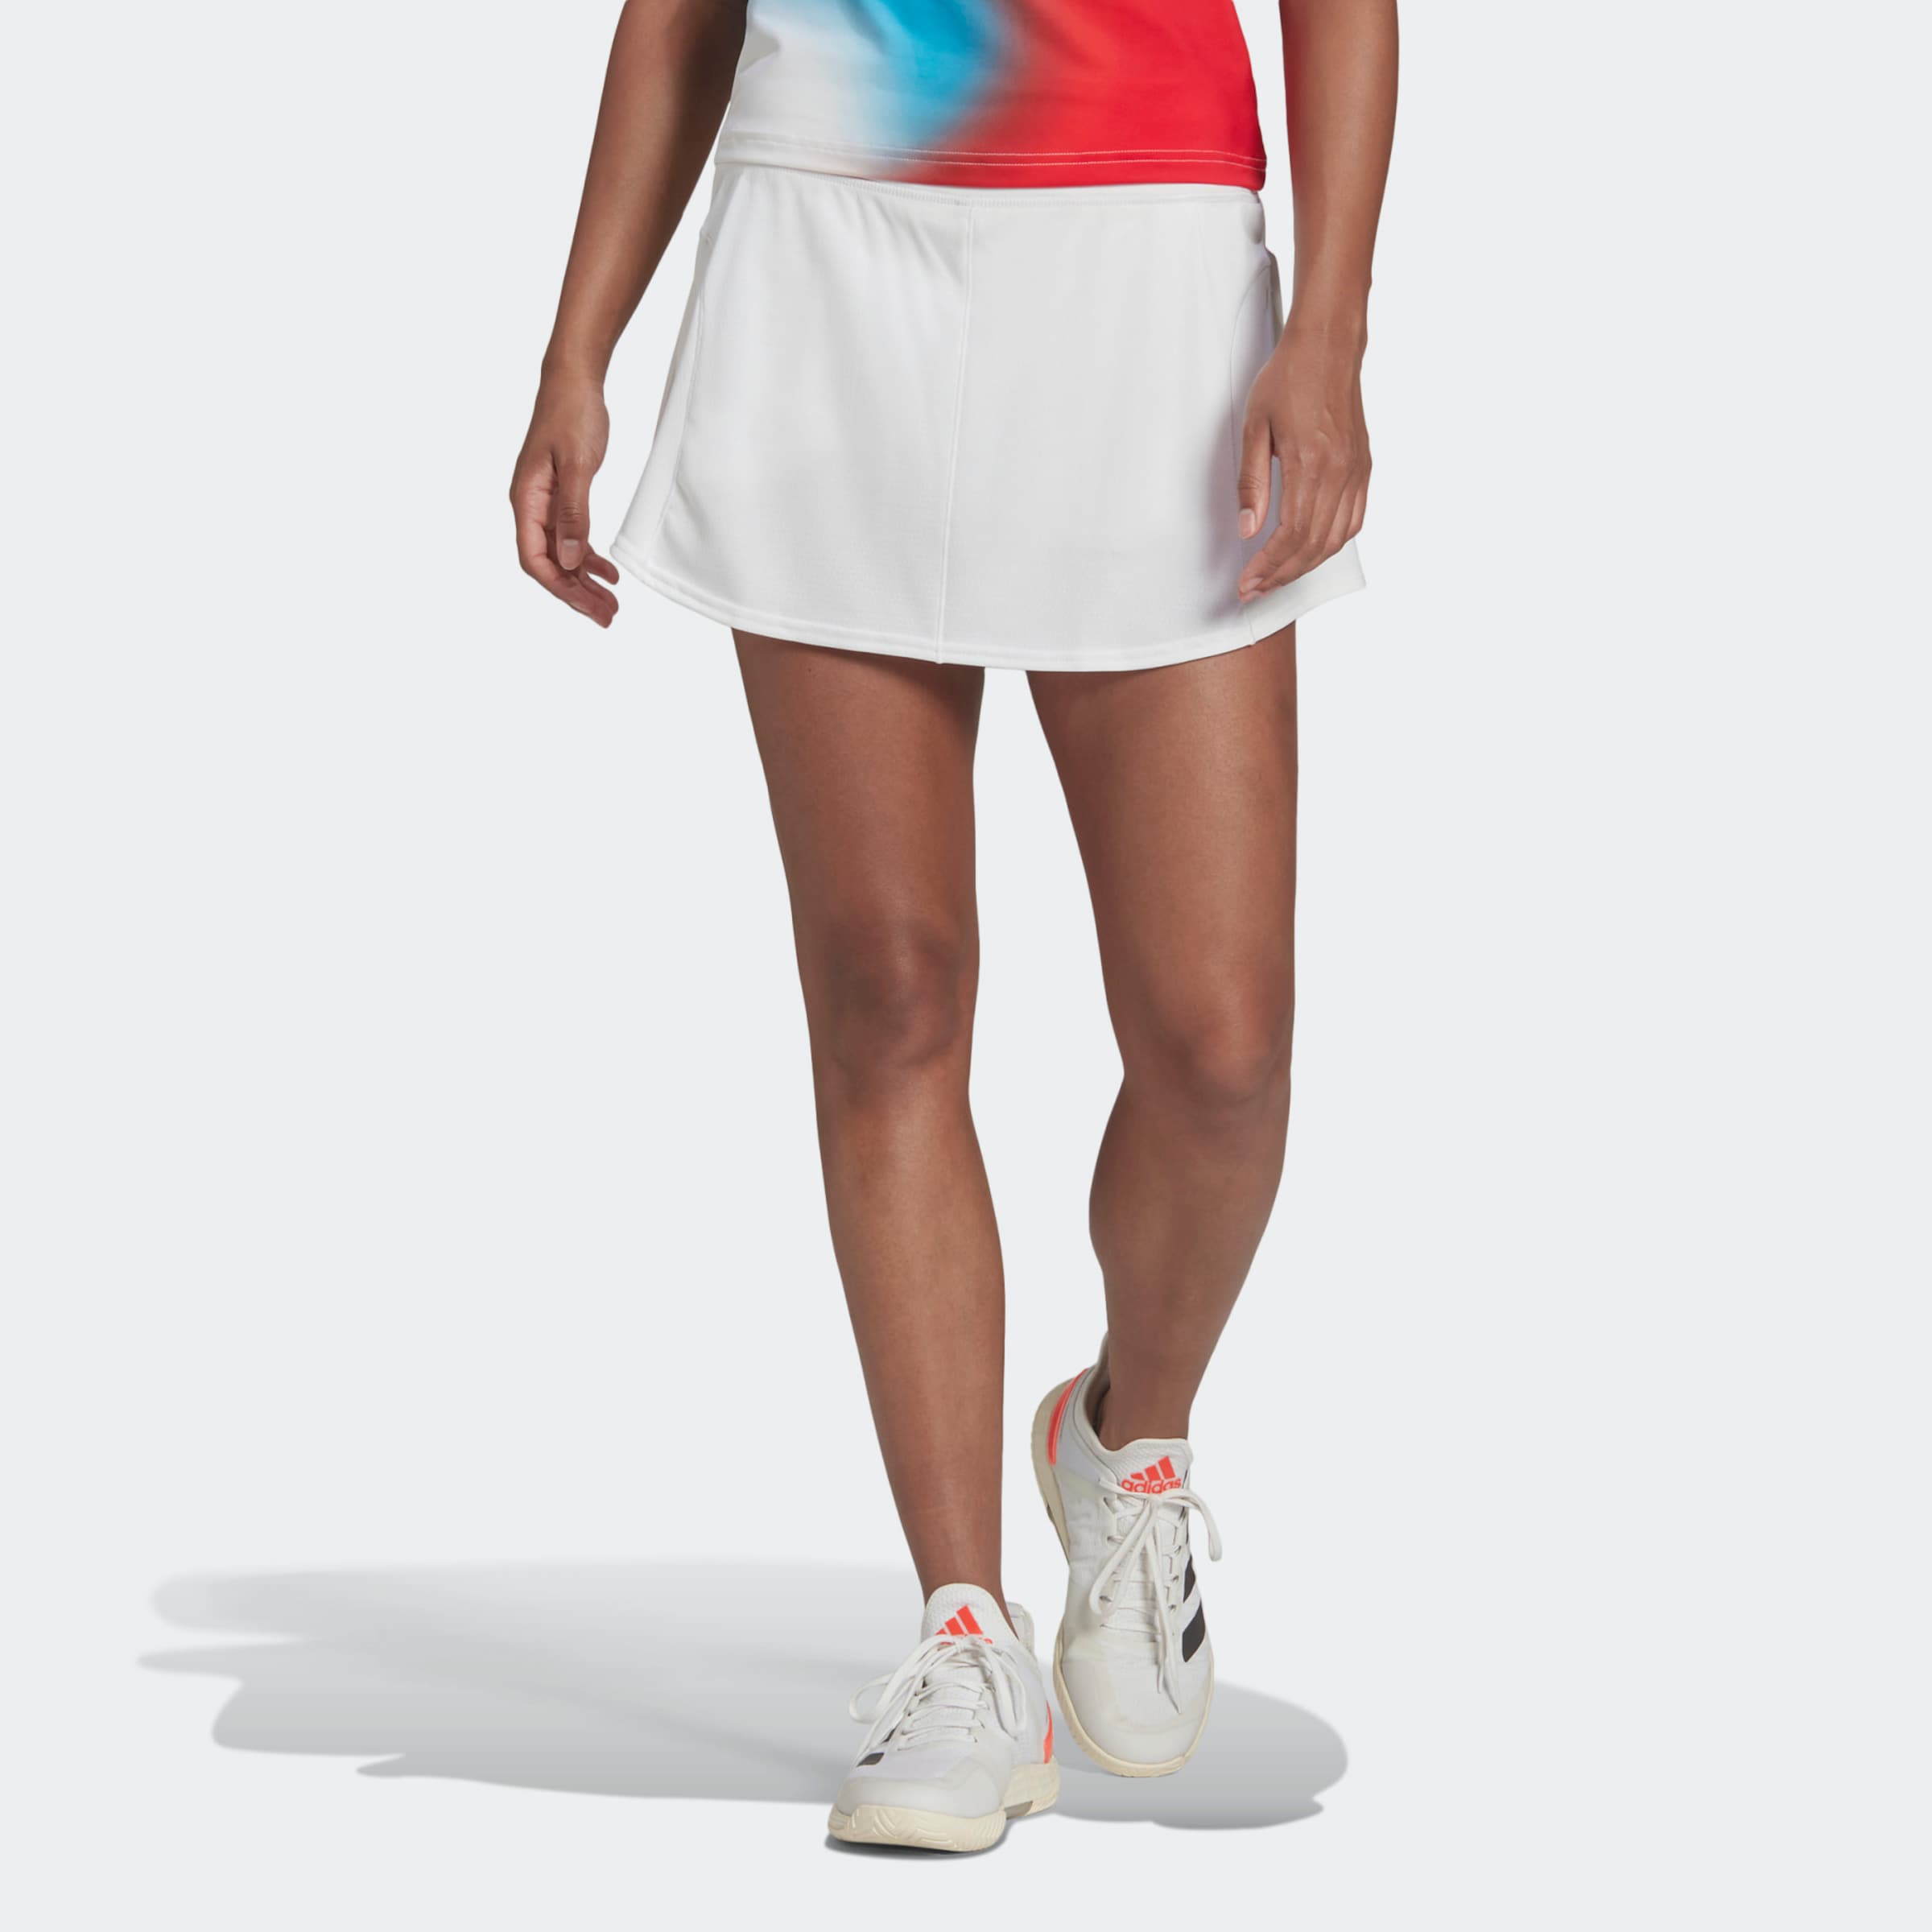 Юбка адидас. Юбка шорты адидас для тенниса. Adidas Tennis юбка. Адидас юбка для тенниса женская. Юбка adidas Rich mnisi Tennis Premium skirt.